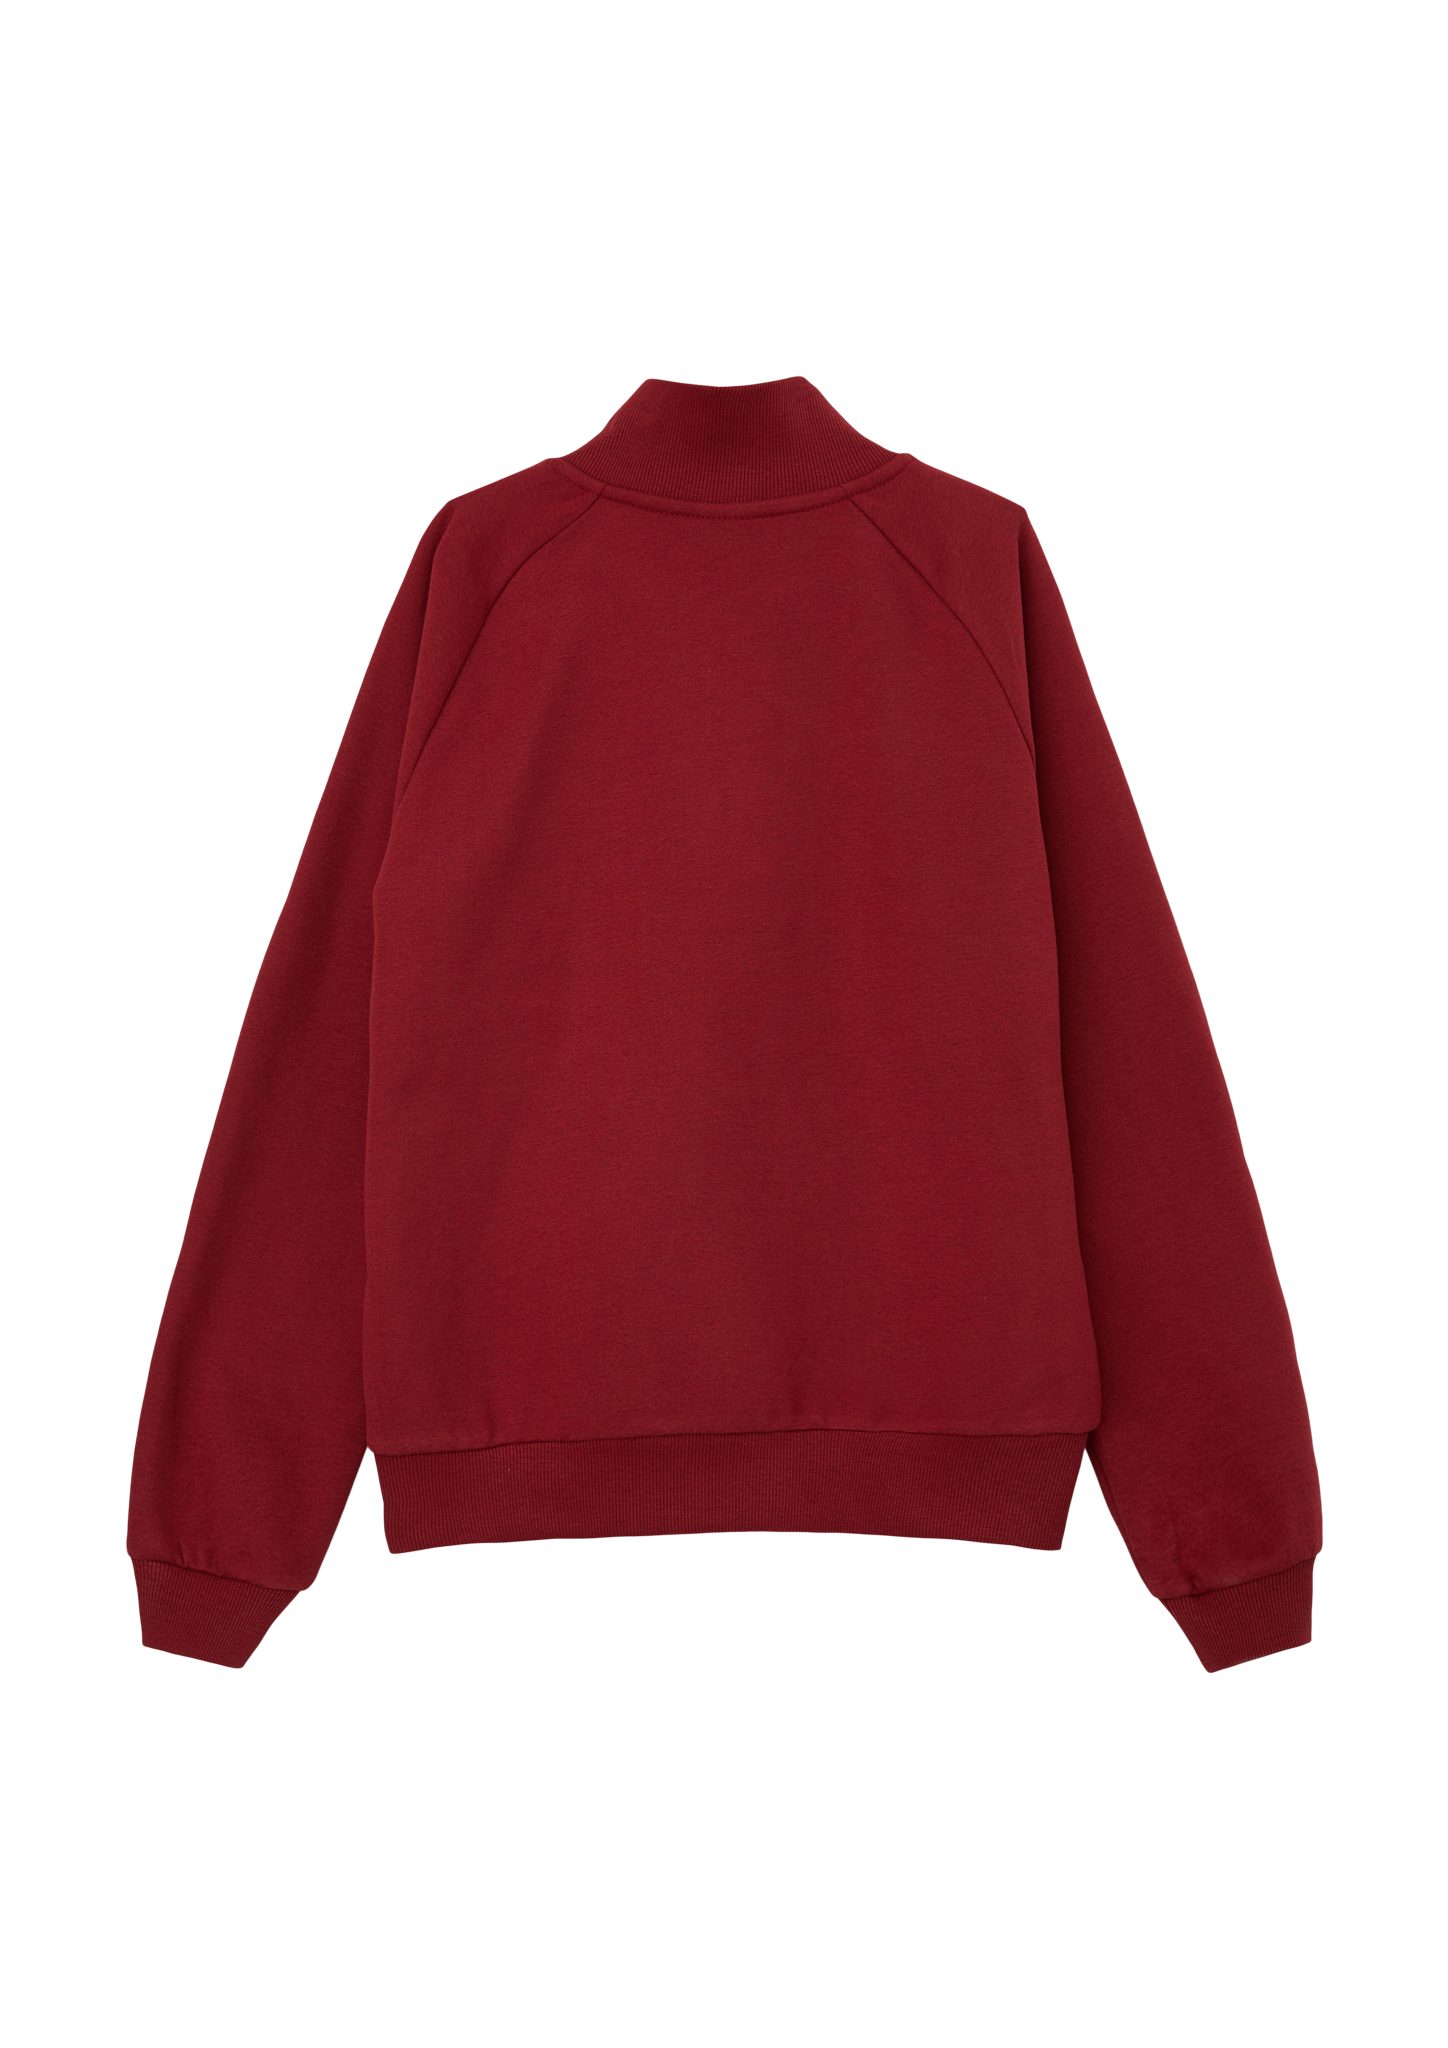 Känguru-Tasche Sweatshirt mit rubinrot Sweatshirt s.Oliver